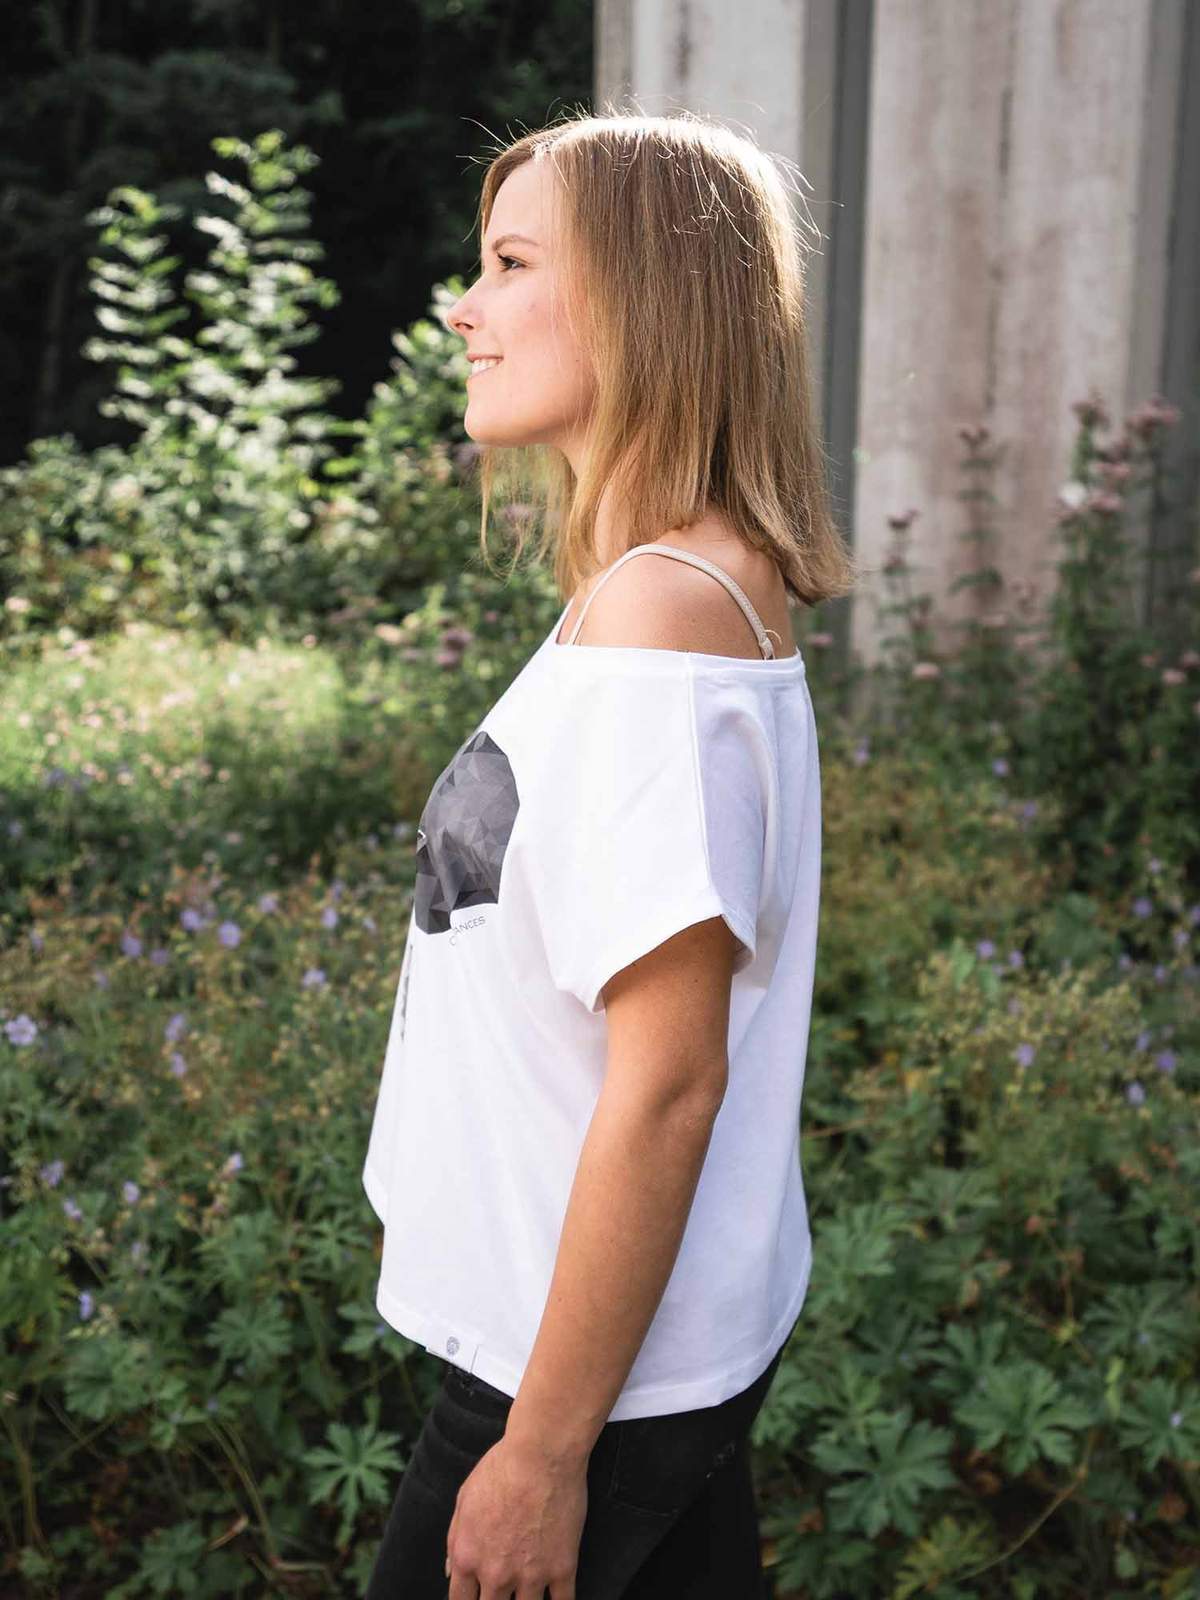 Damen T-Shirt mit XL Rundhalsausschnitt Weiß Grau Geometrischer Elefant Gr XS-XL